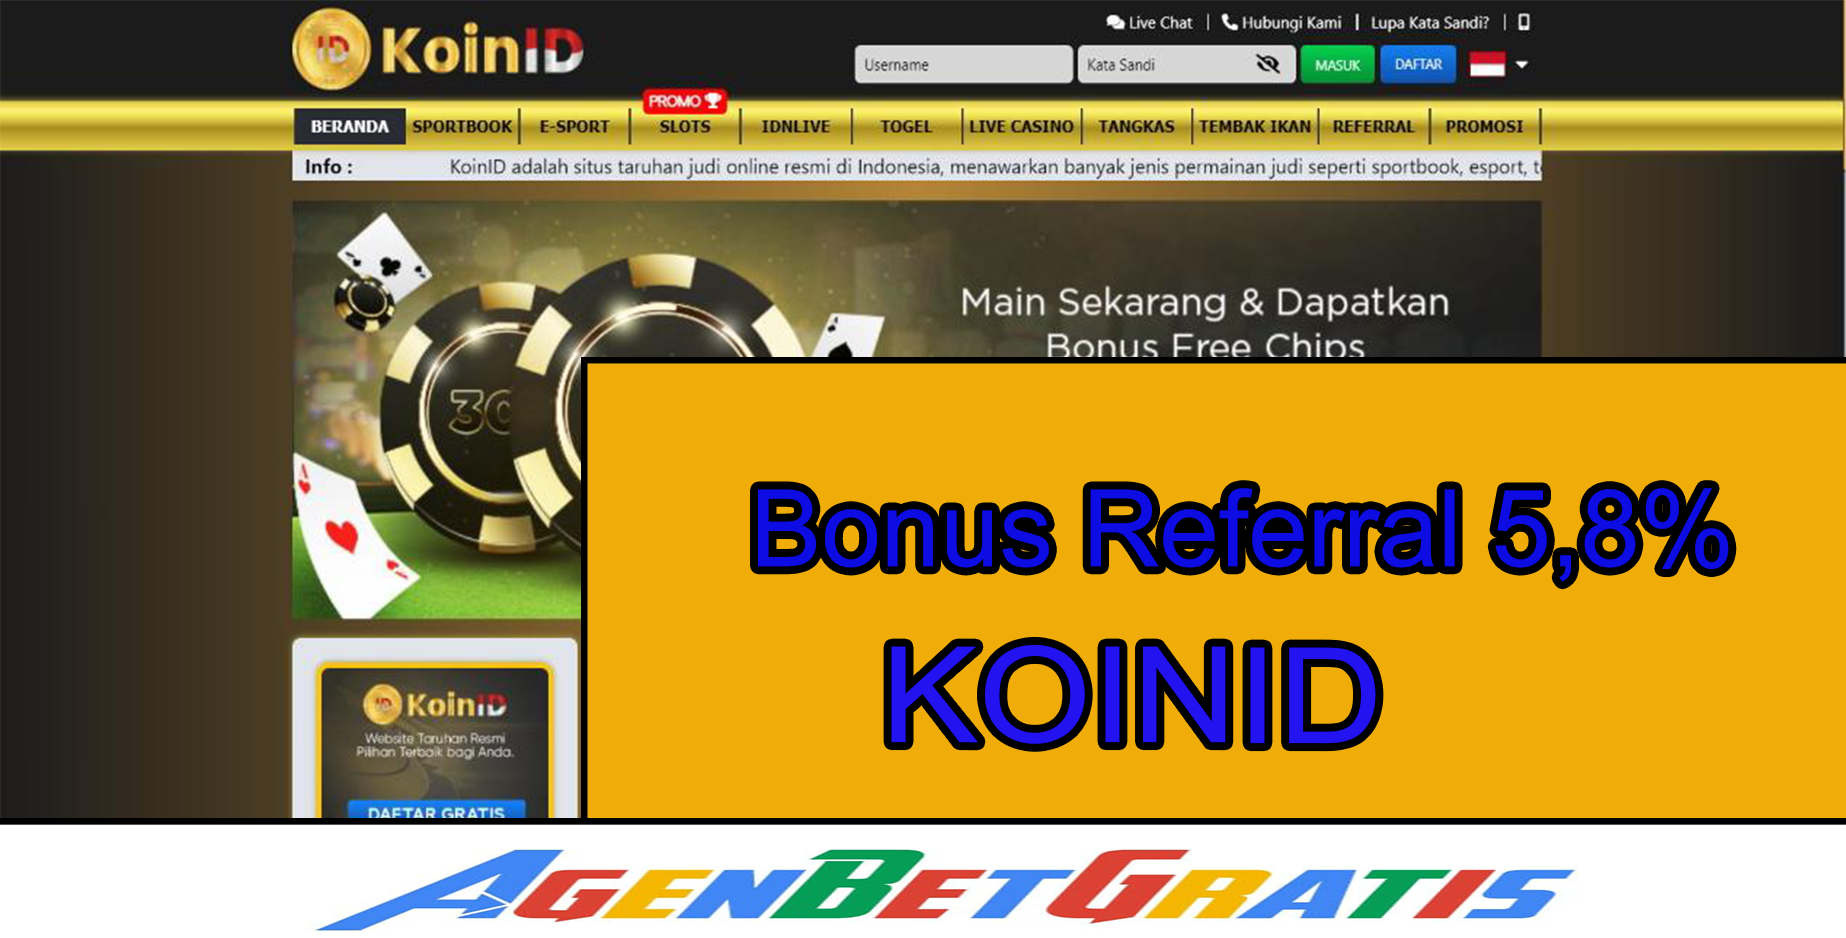 KOINID - Bonus Referral 5,8%